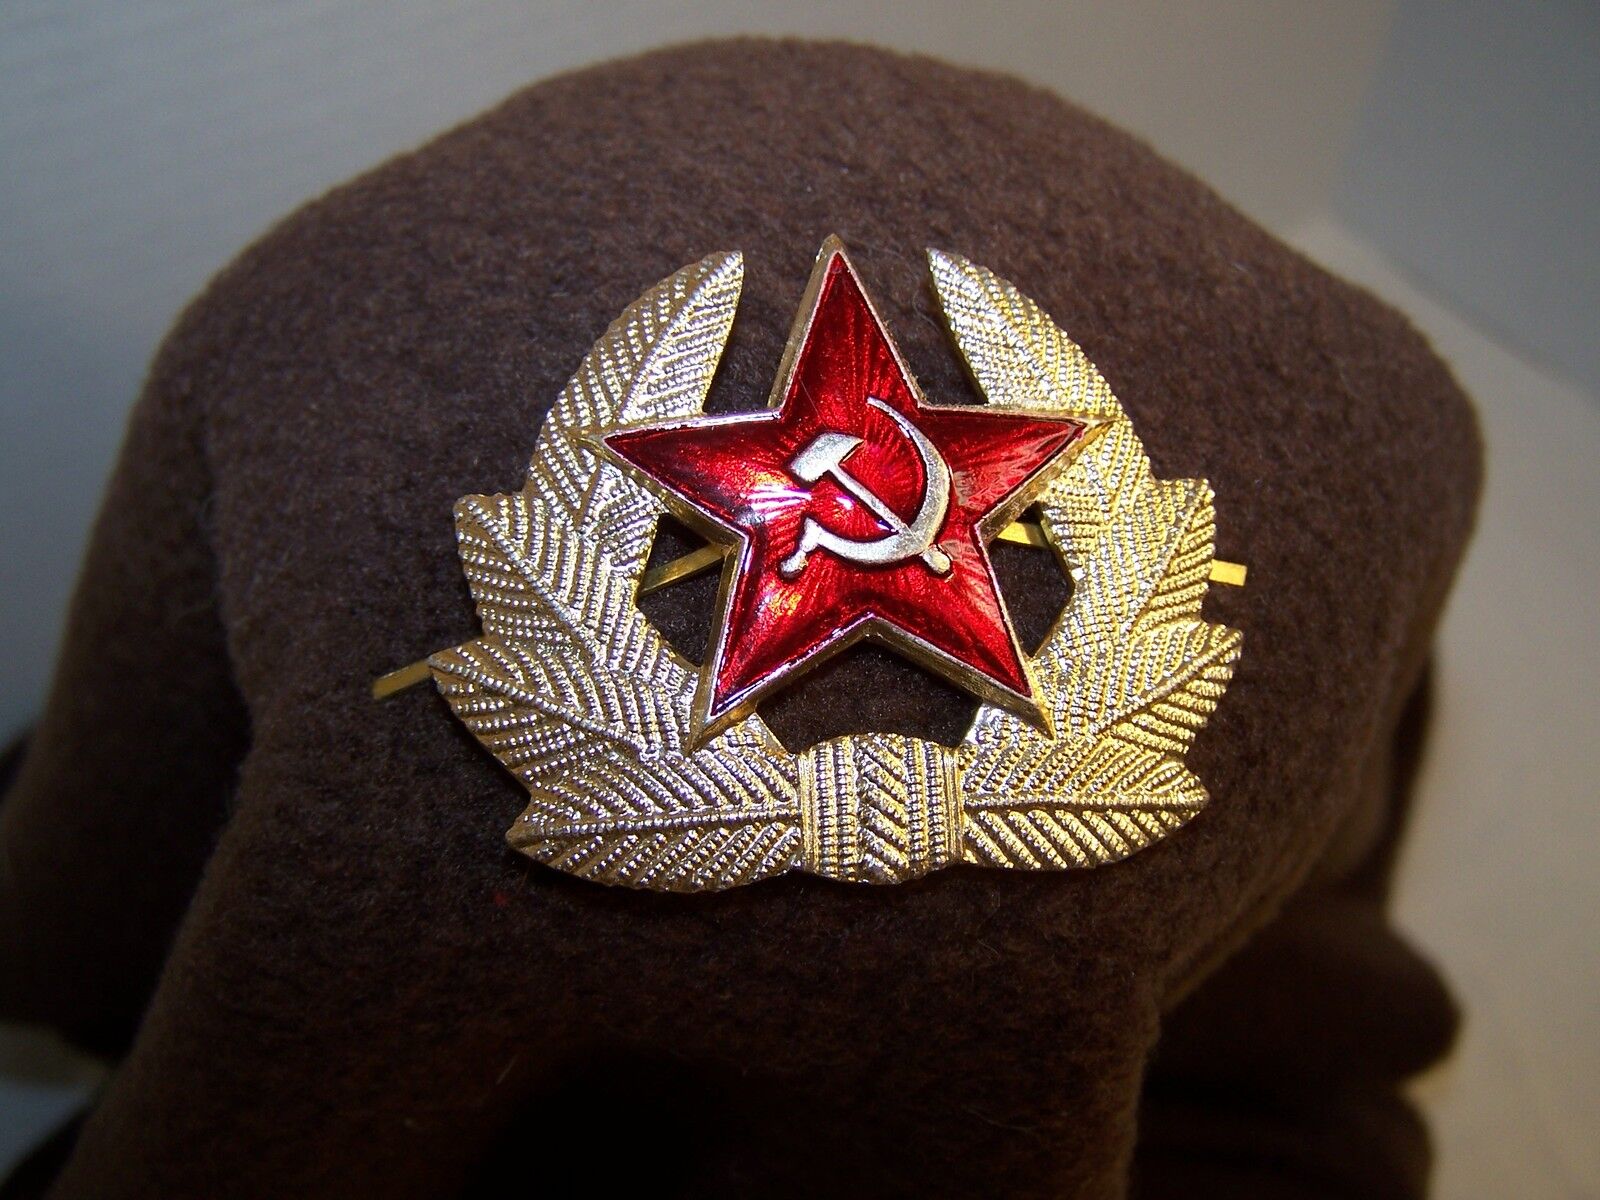 USSR Service Cap & Winter cap insignia, enlisted man's. 1980's. New.